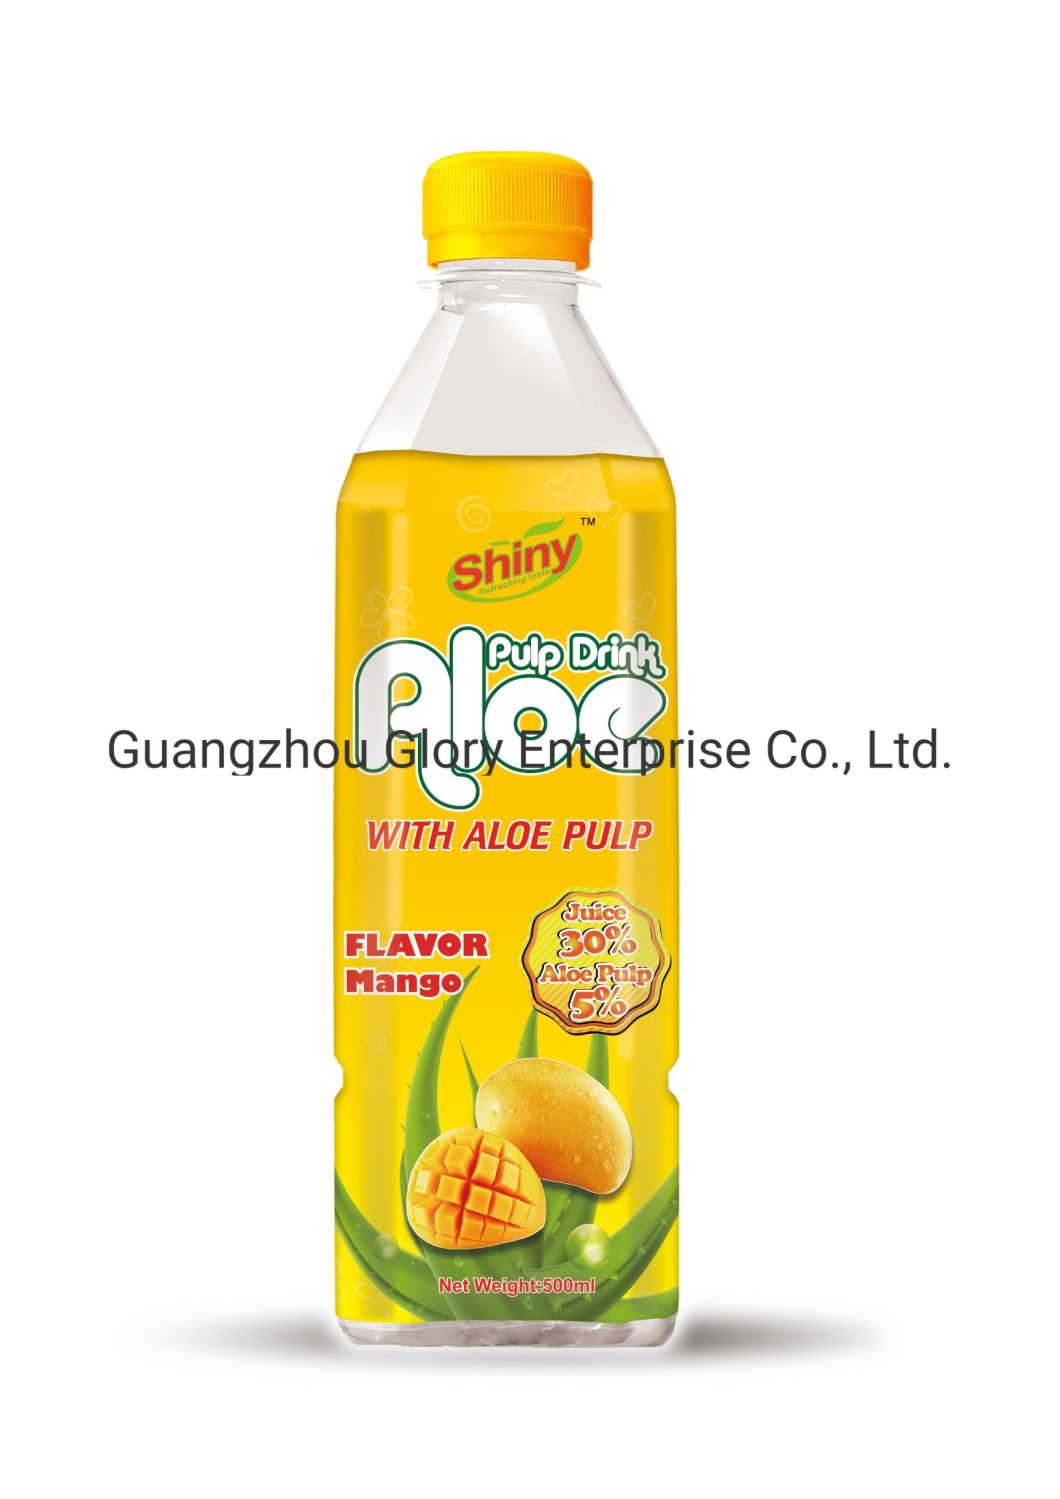 500ml Shiny Brand Aloe Vera Drink Mango Flavor with 5% Aloe Pulp and 30% Juice